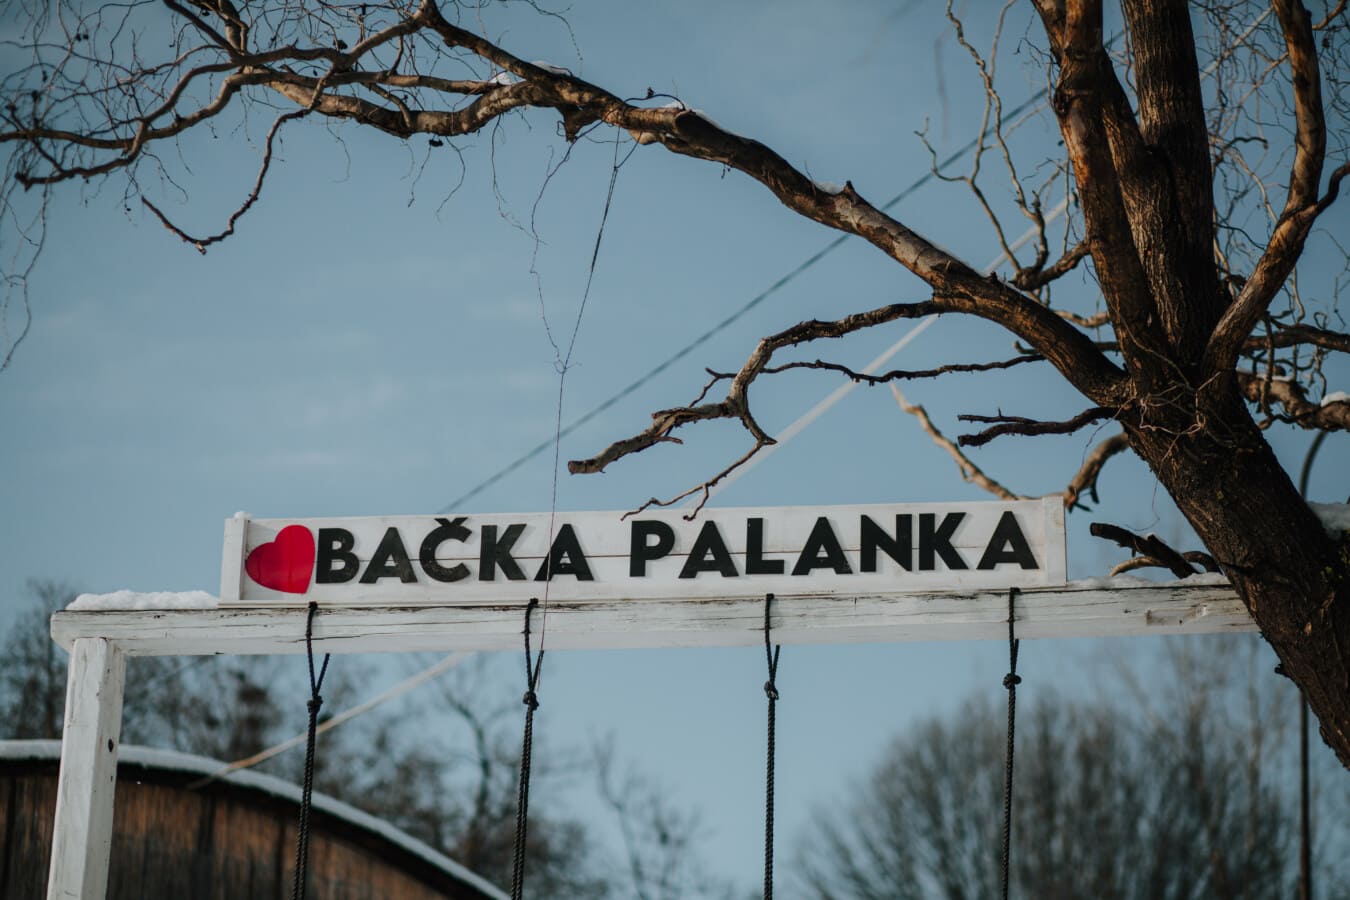 Backa Palanka text, outdoor, wooden, heart, sign, winter, snow, wood, signal, outdoors